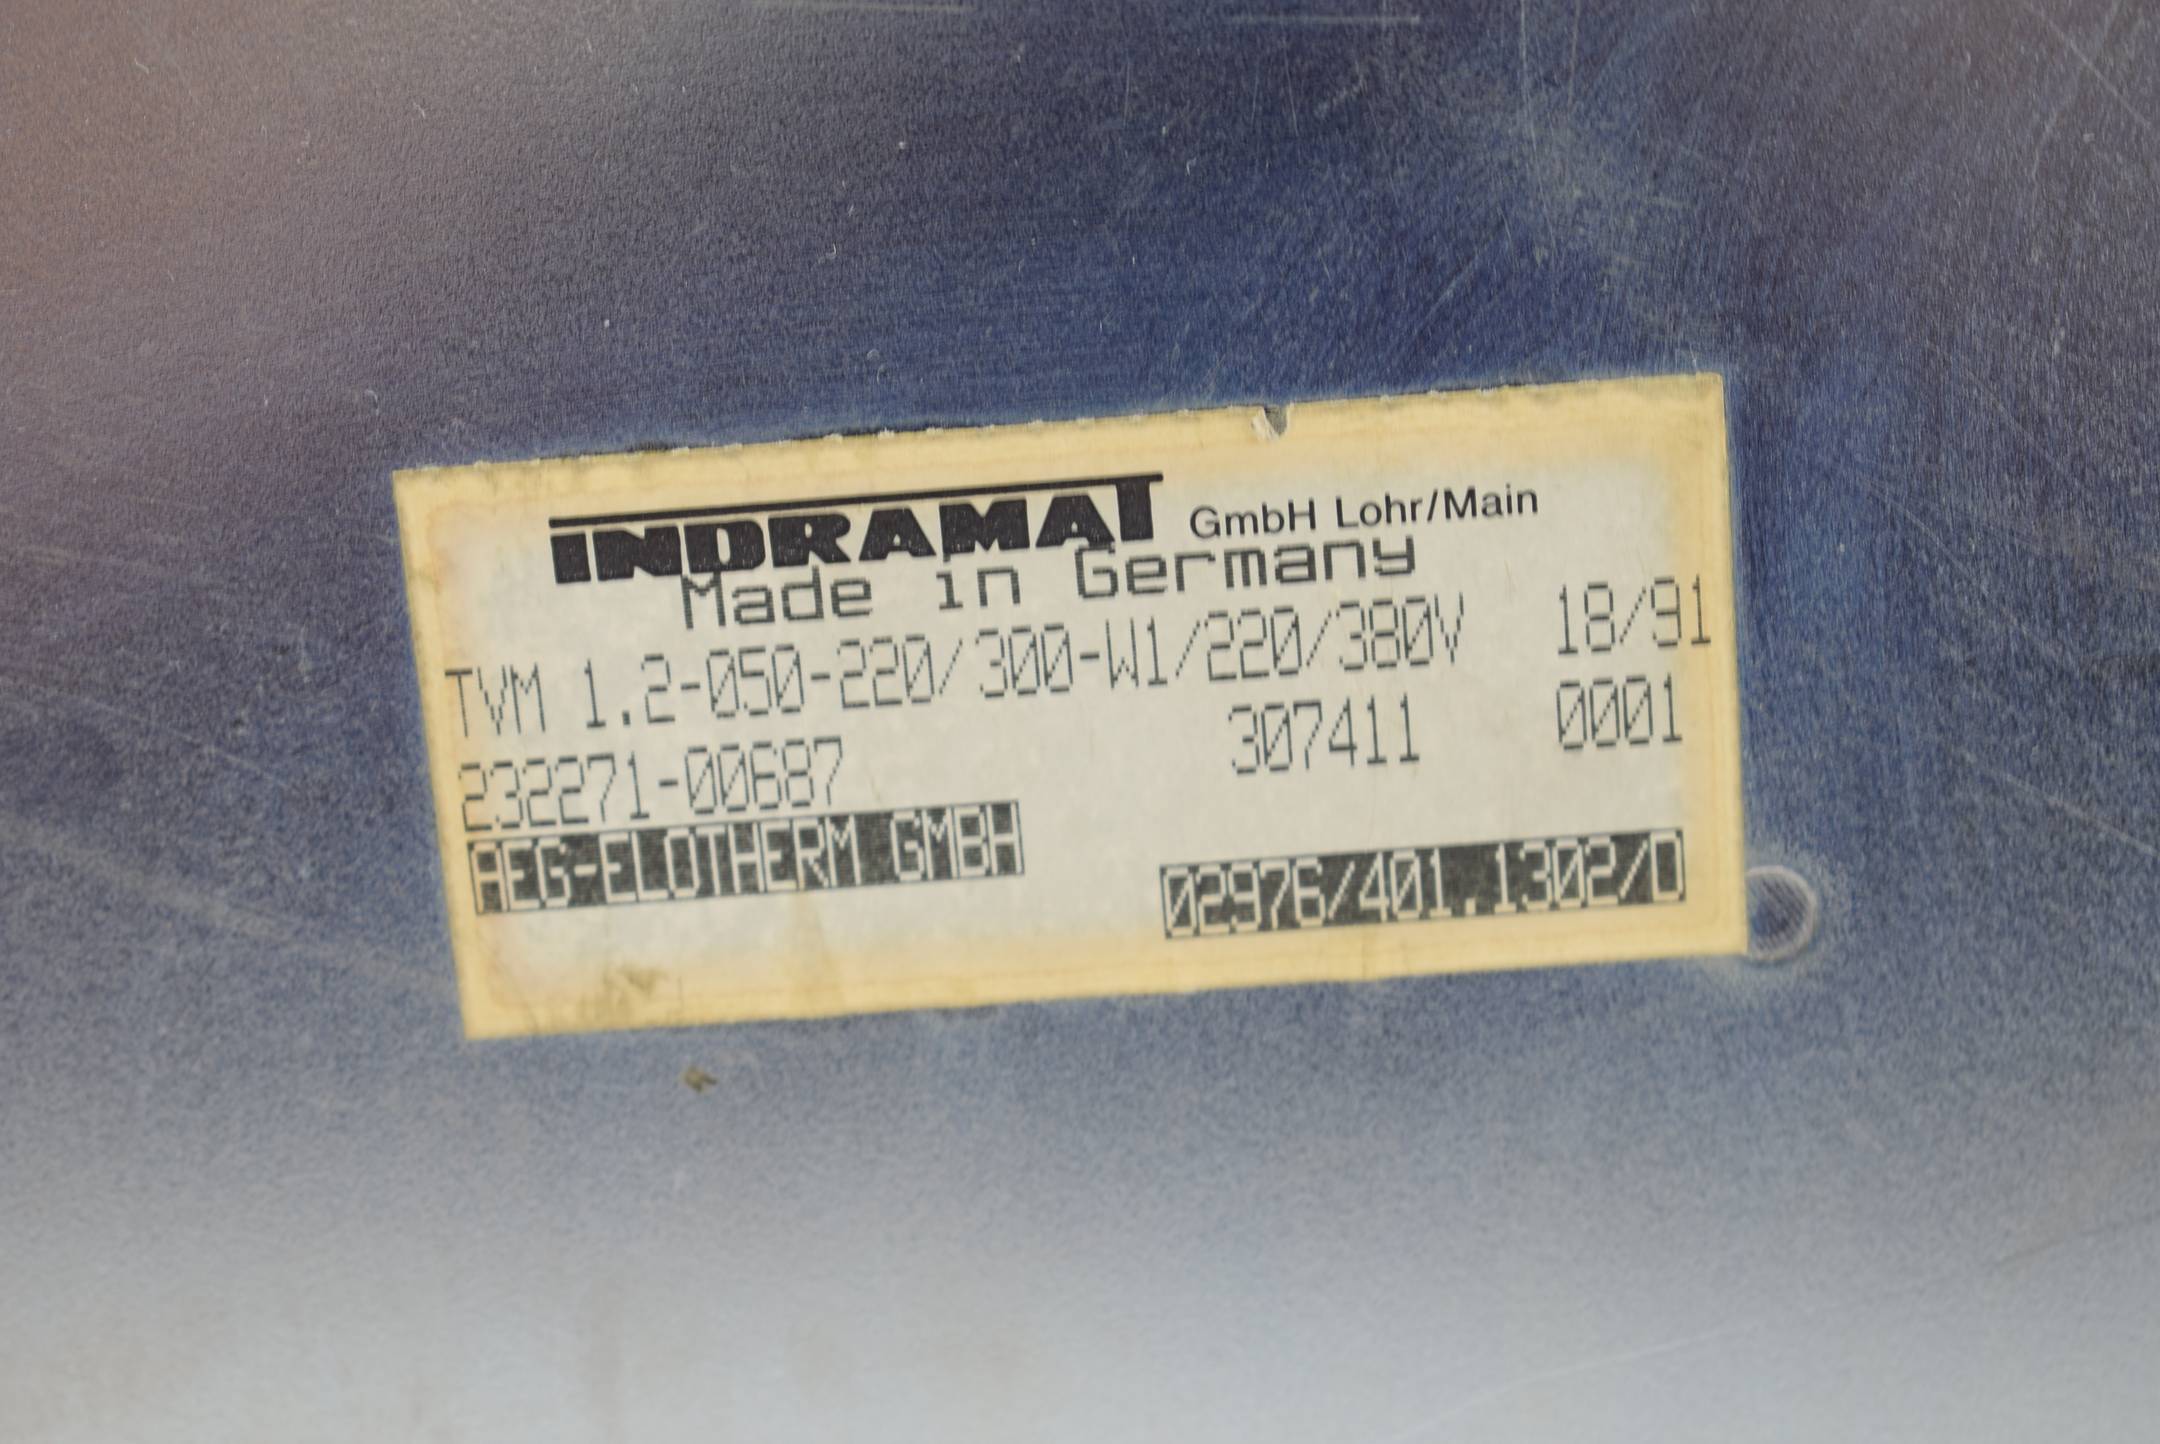 Indramat A.C. Servo Controller TVM 1.2-050-220/330-W1/220/380V
